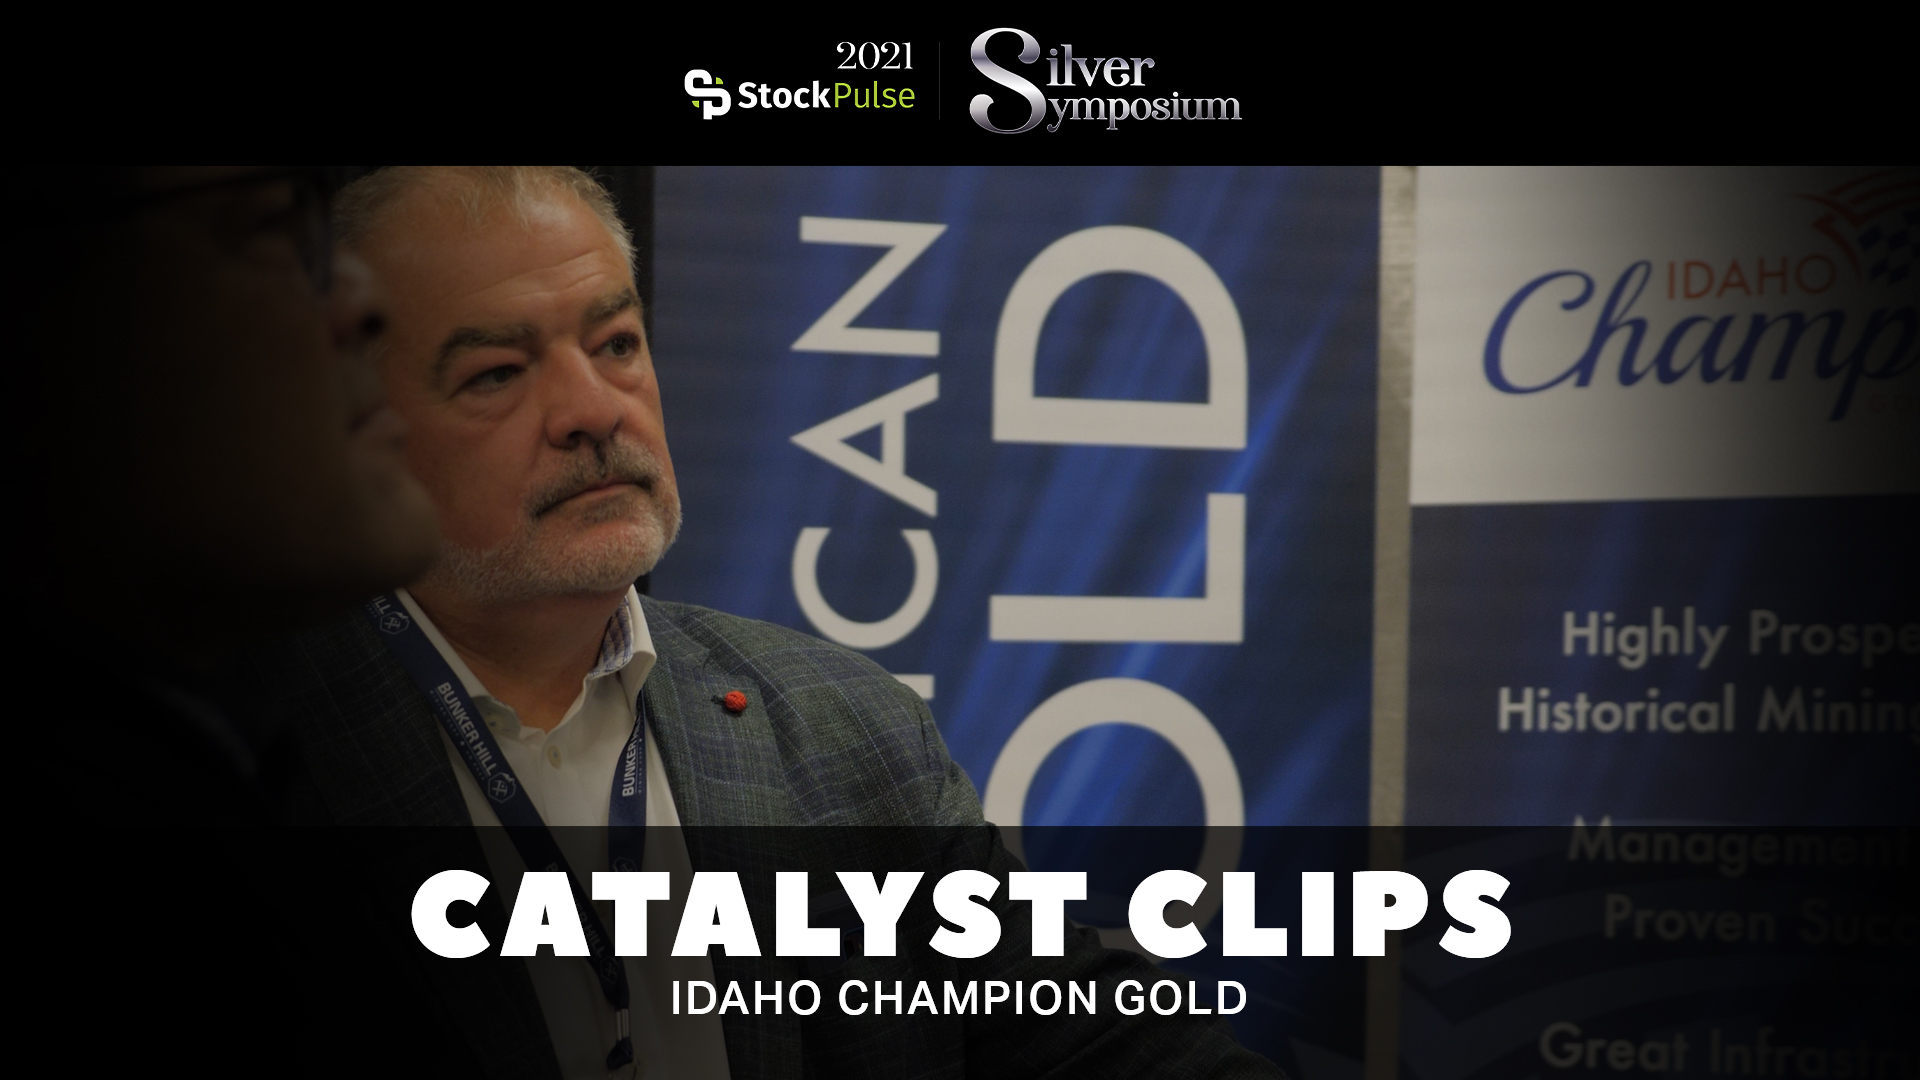 2021 StockPulse Silver Symposium Catalyst Clips | Jonathan Buick of Idaho Champion Gold